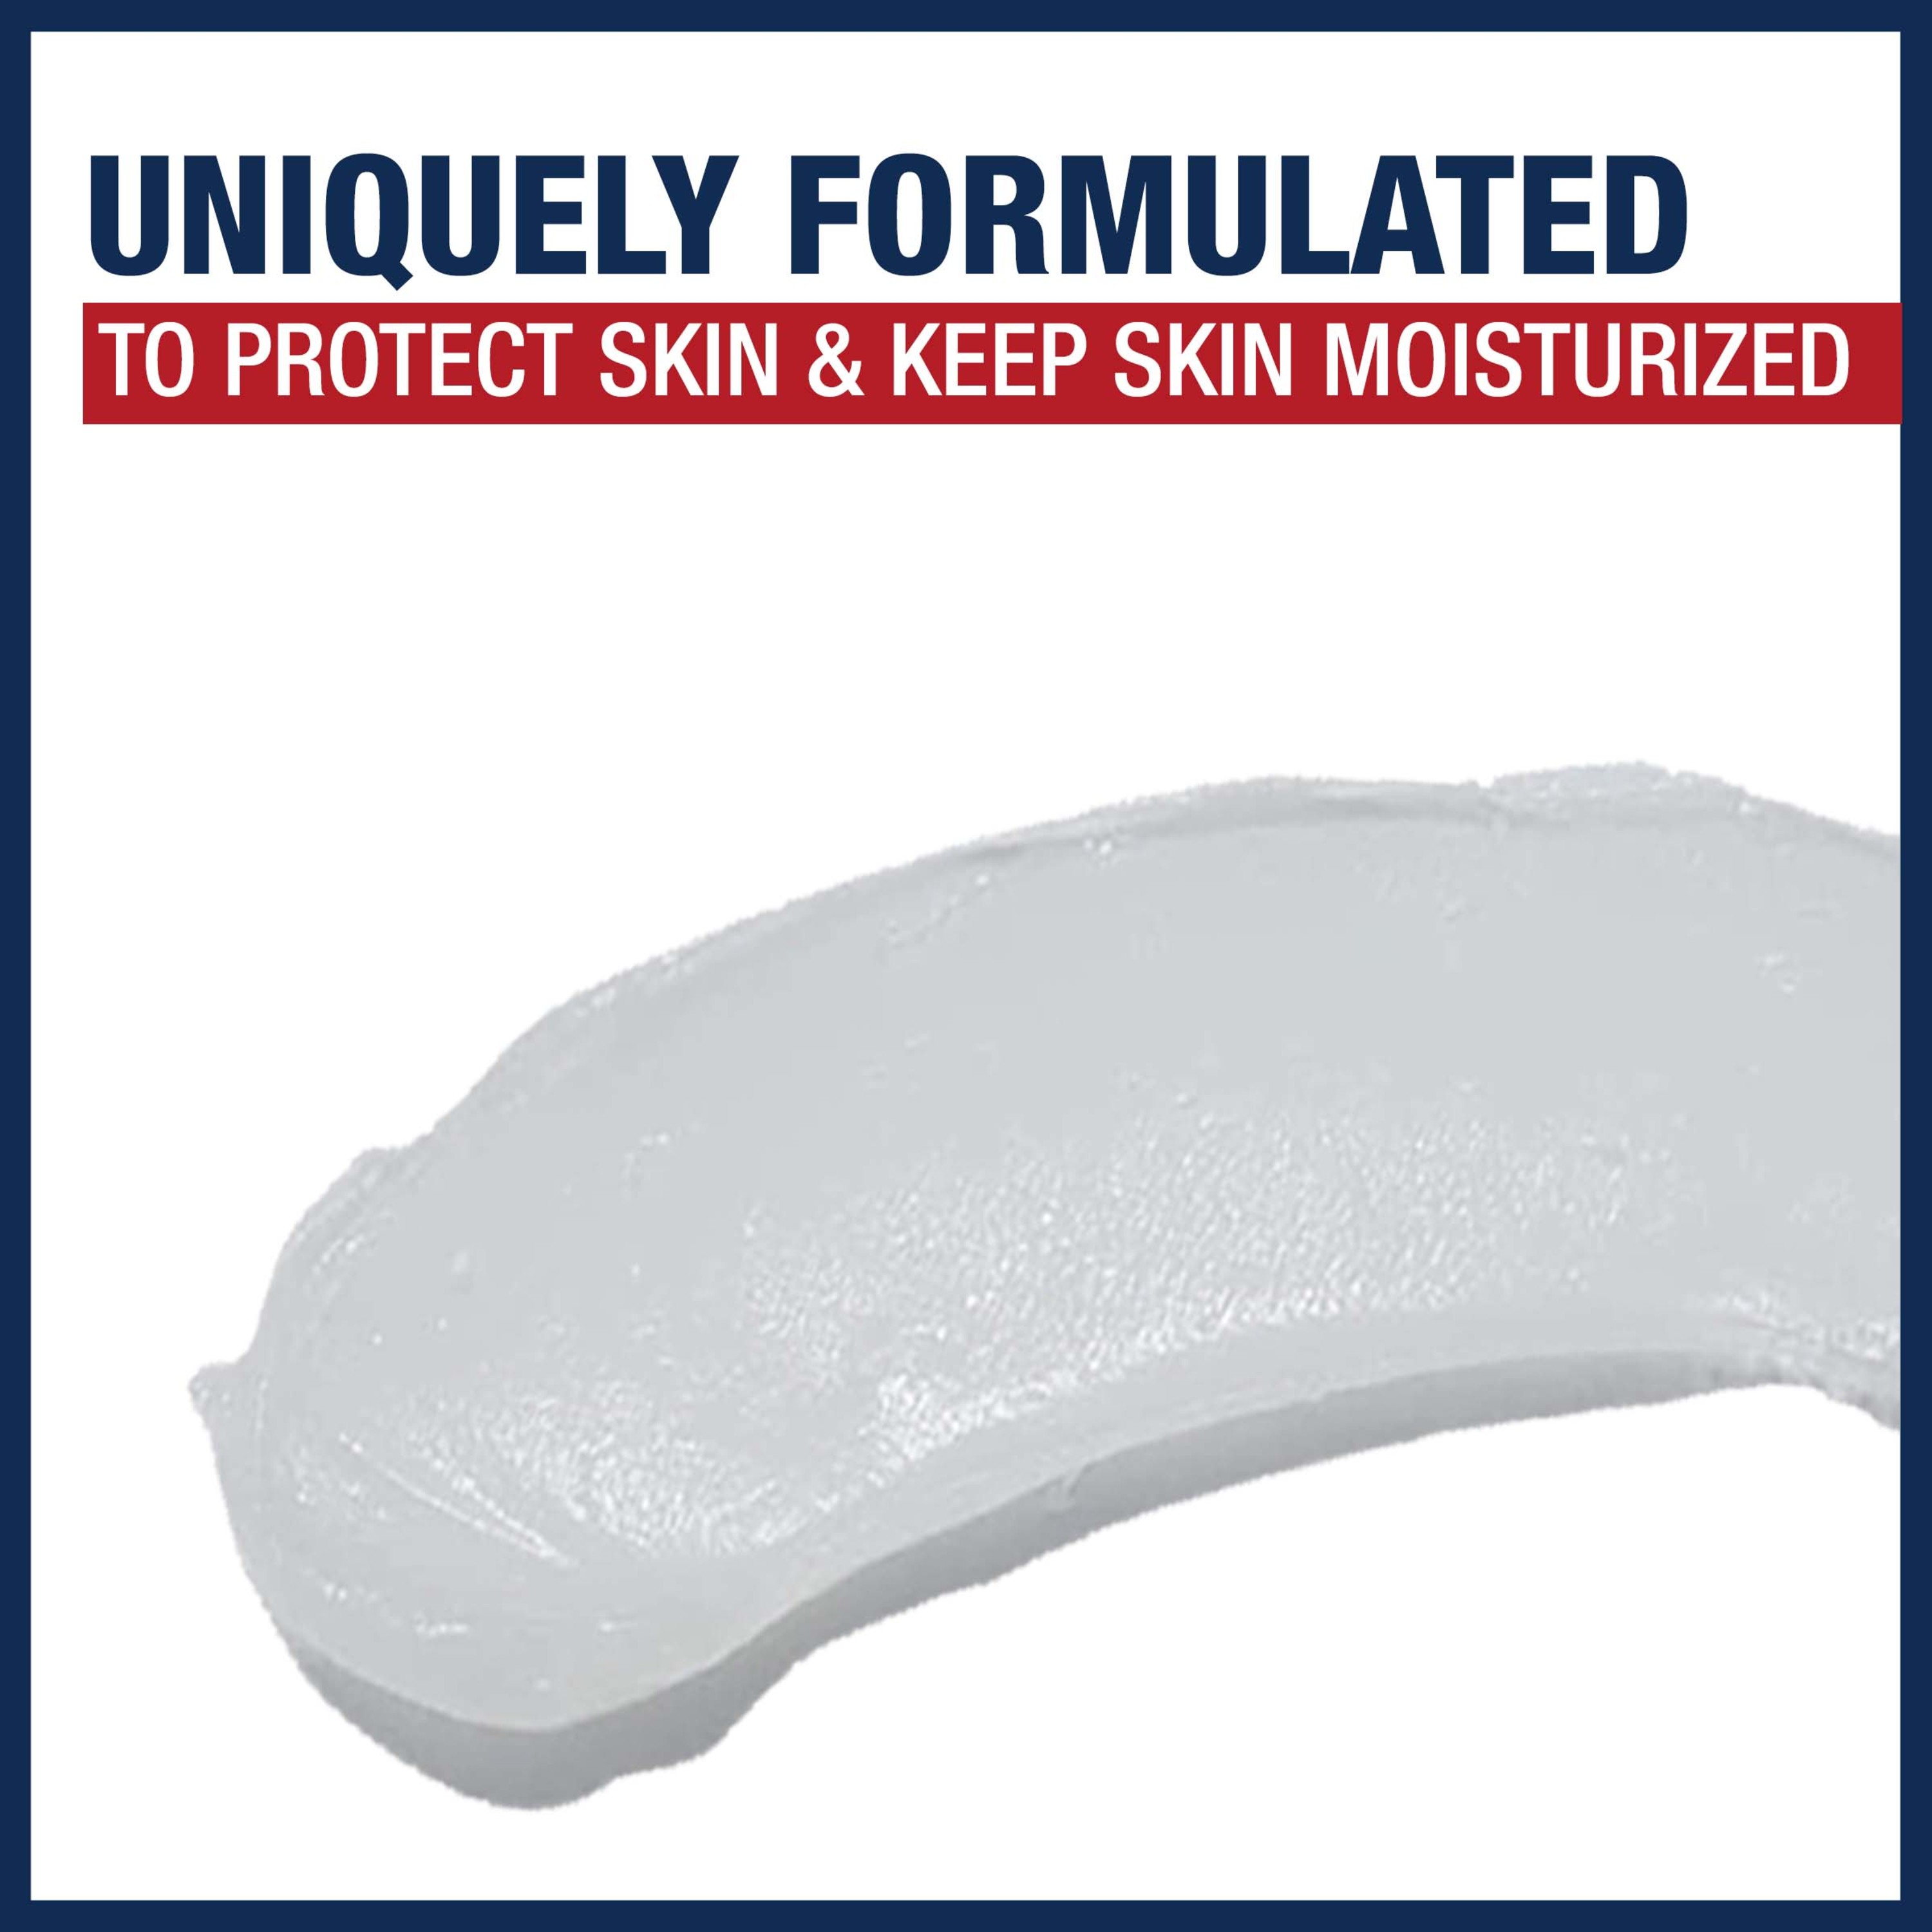 Aquaphor Healing Ointment Skin Protectant, Use After Hand Washing, 1.75 oz. Tube - image 4 of 17